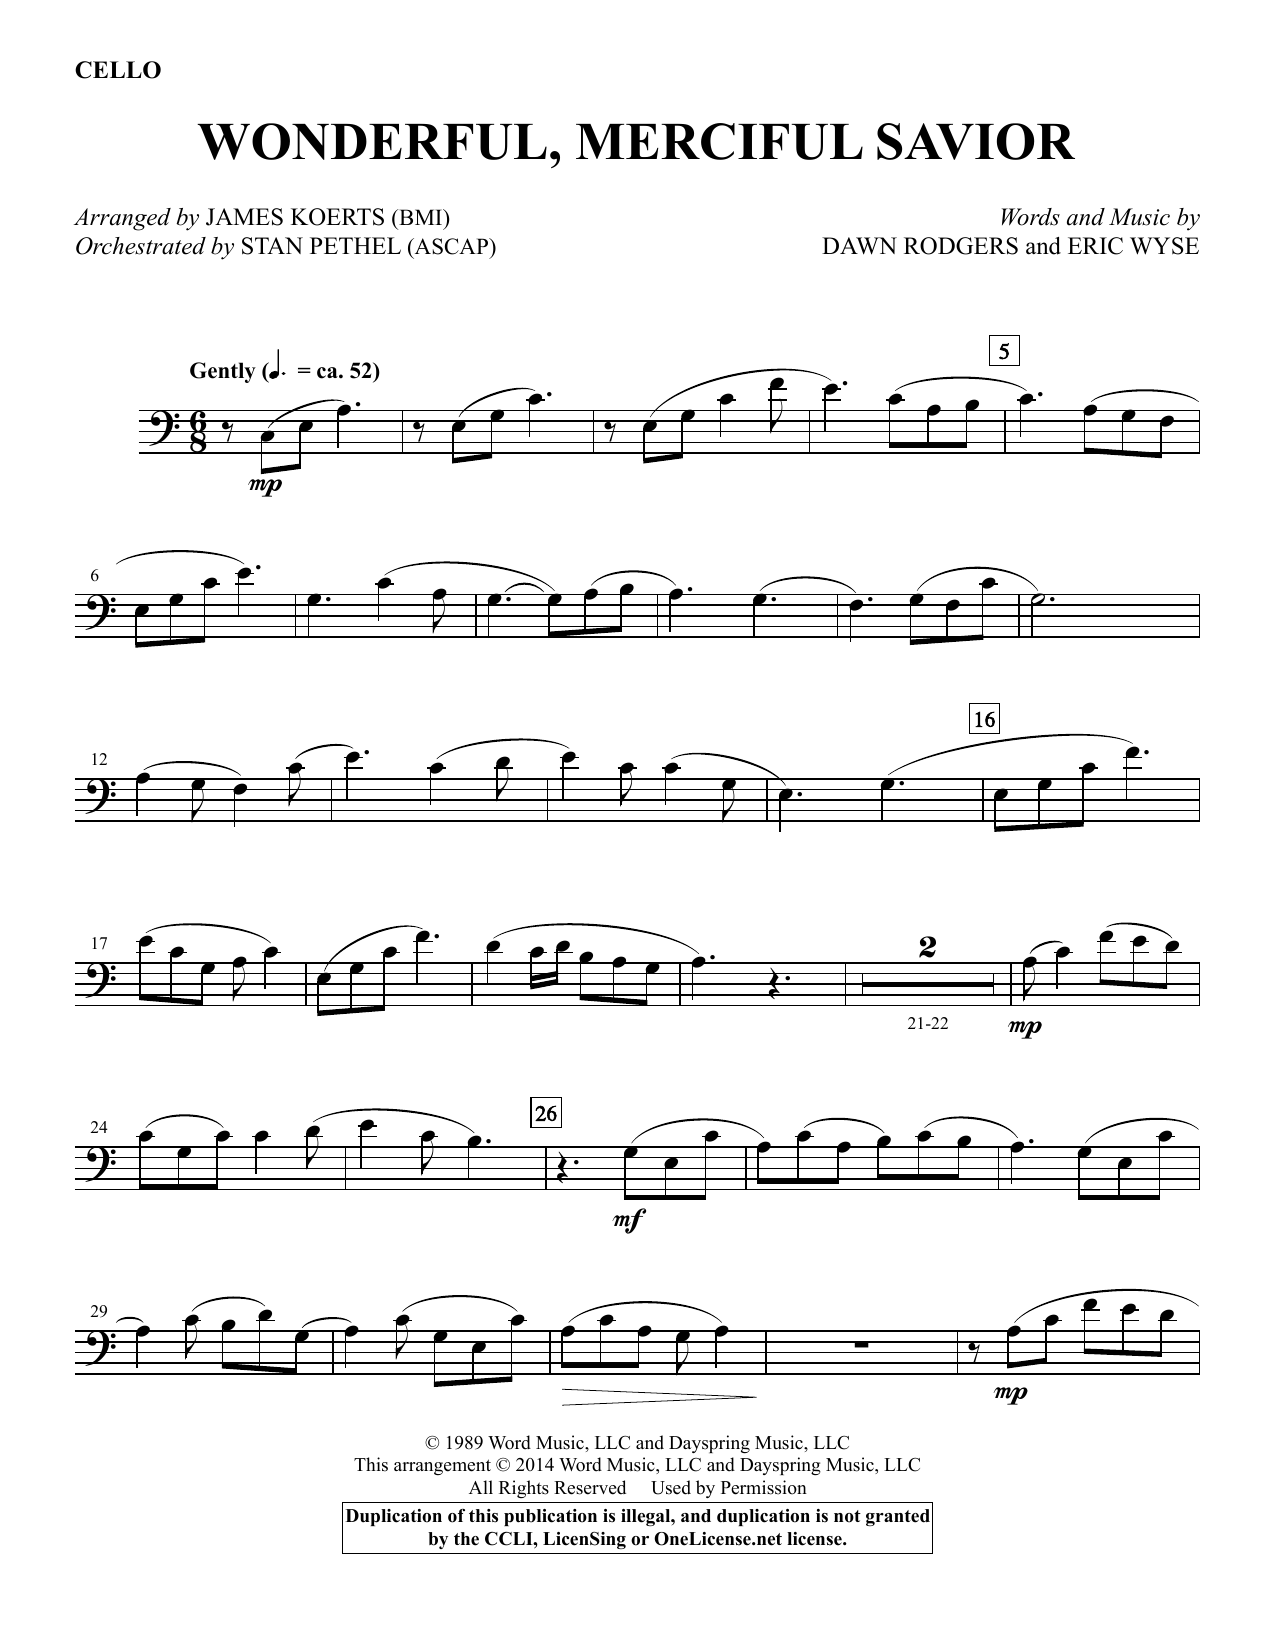 James Koerts Wonderful, Merciful Savior - Cello sheet music notes and chords. Download Printable PDF.